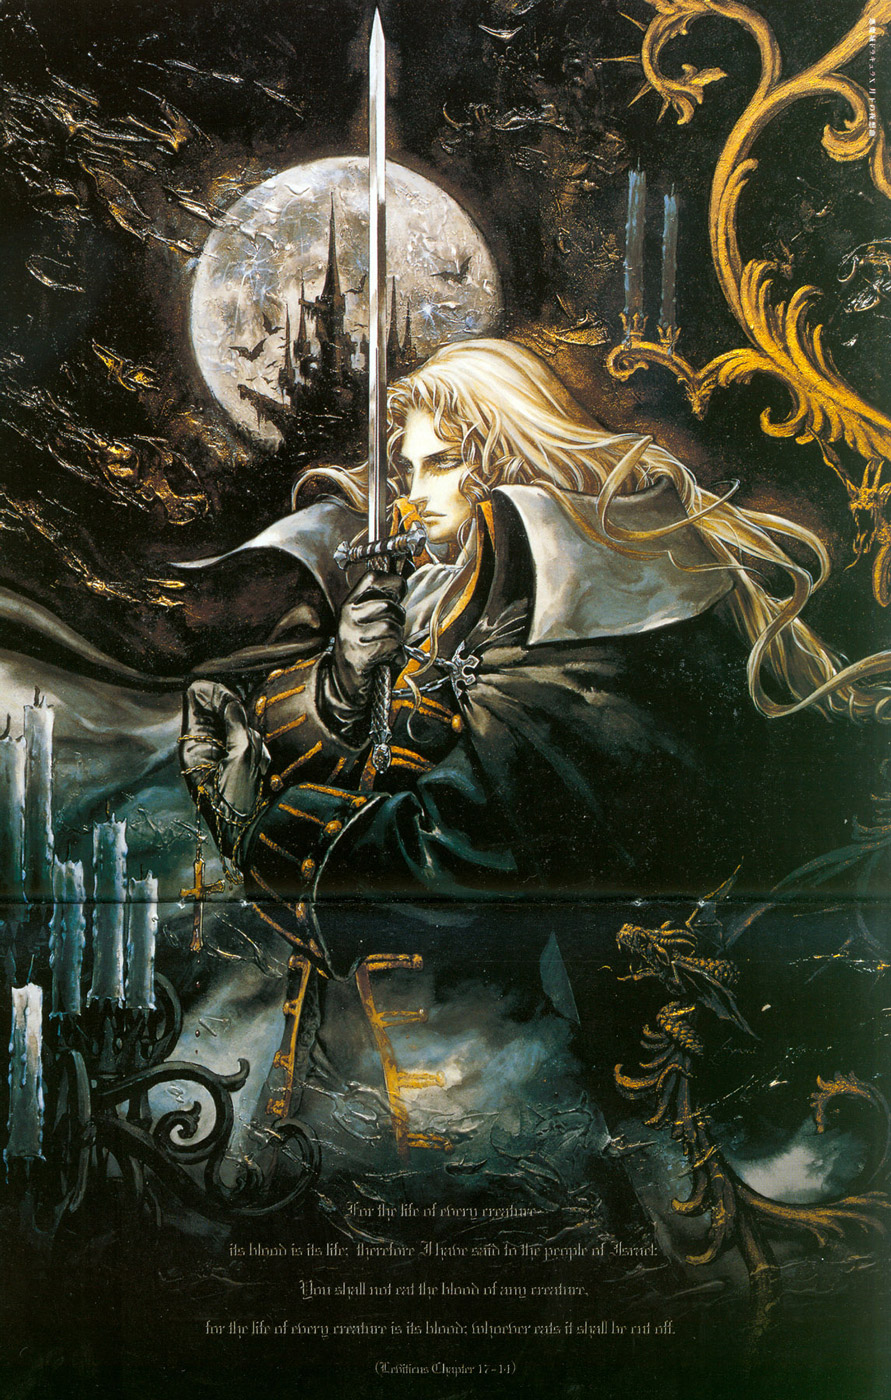 Castlevania: Aria of Sorrow image by Ayami Kojima